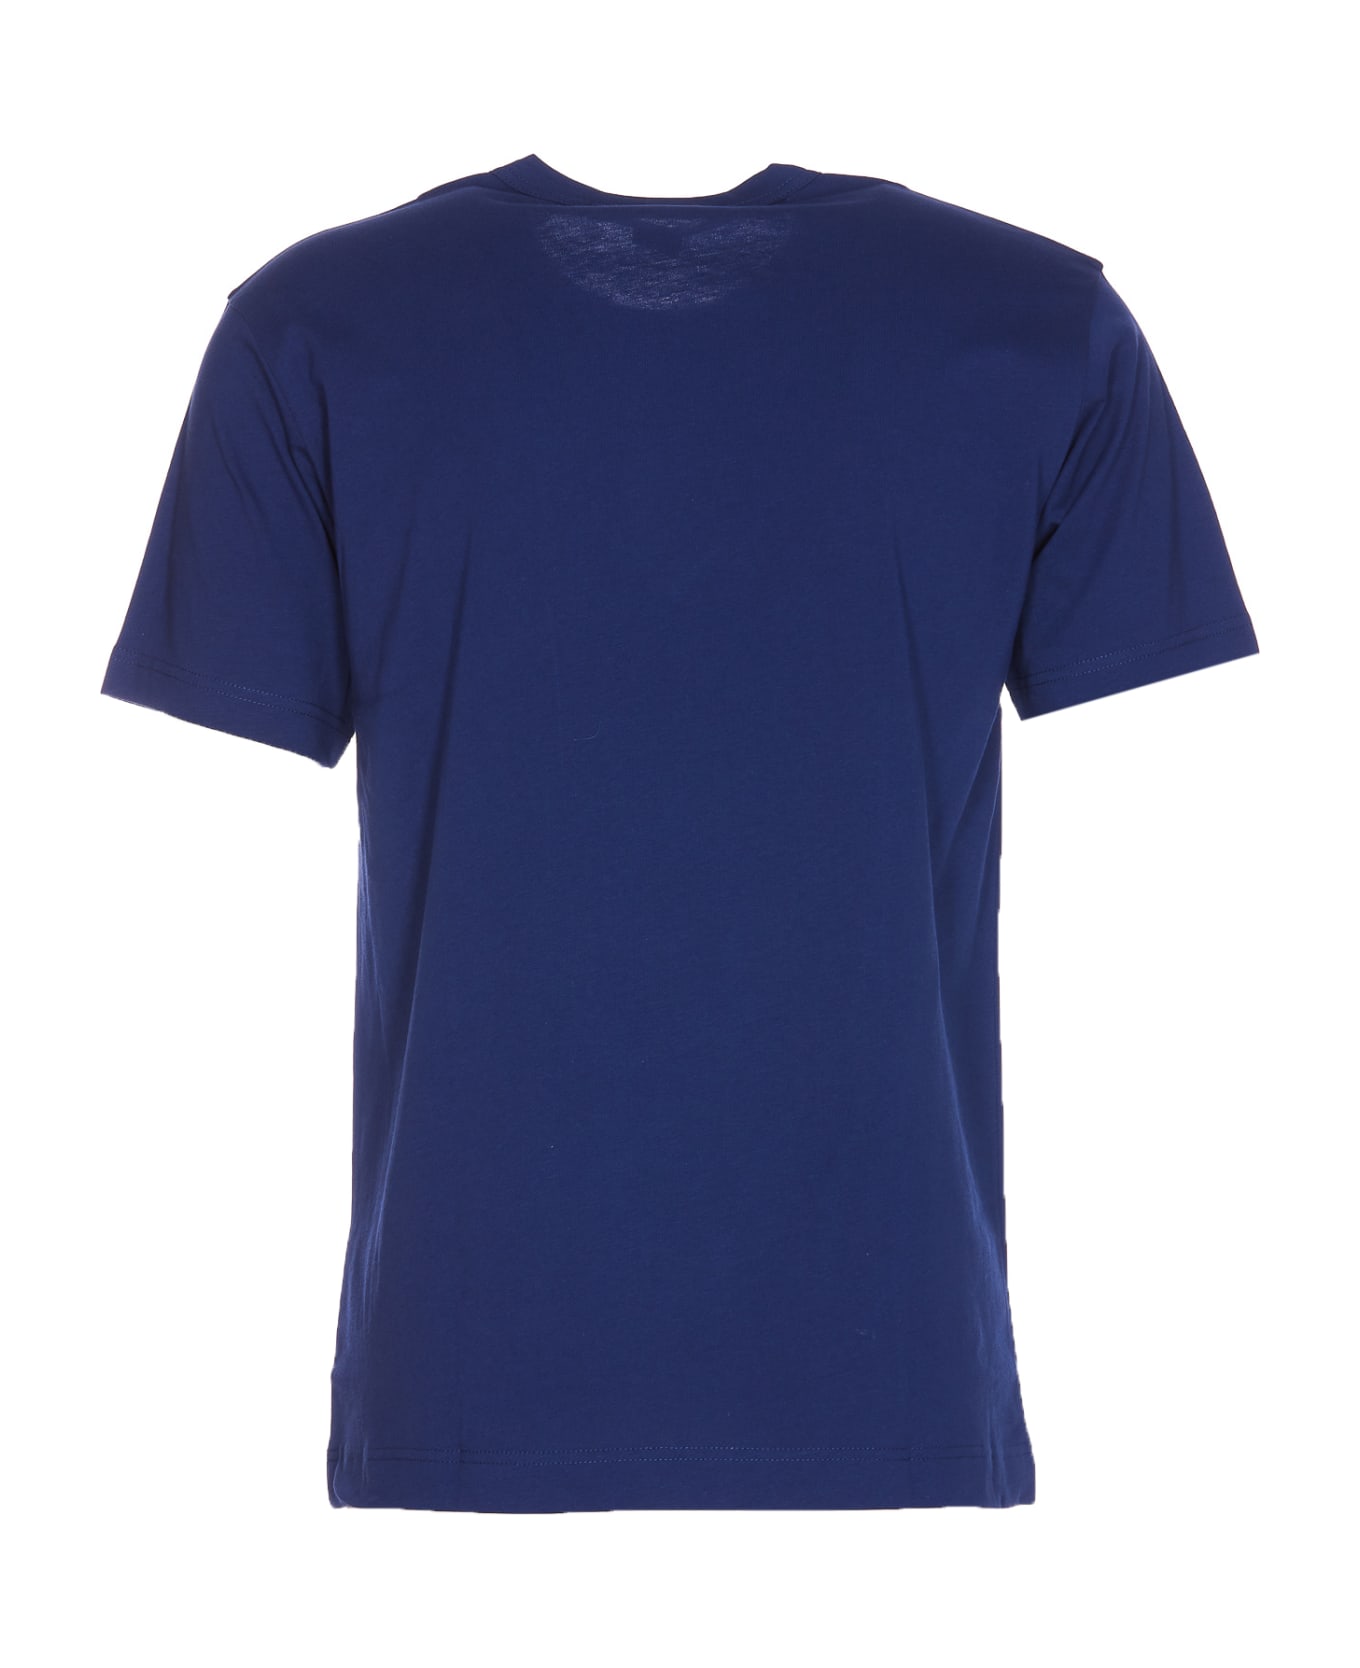 Comme des Garçons Logo T-shirt - Blue シャツ